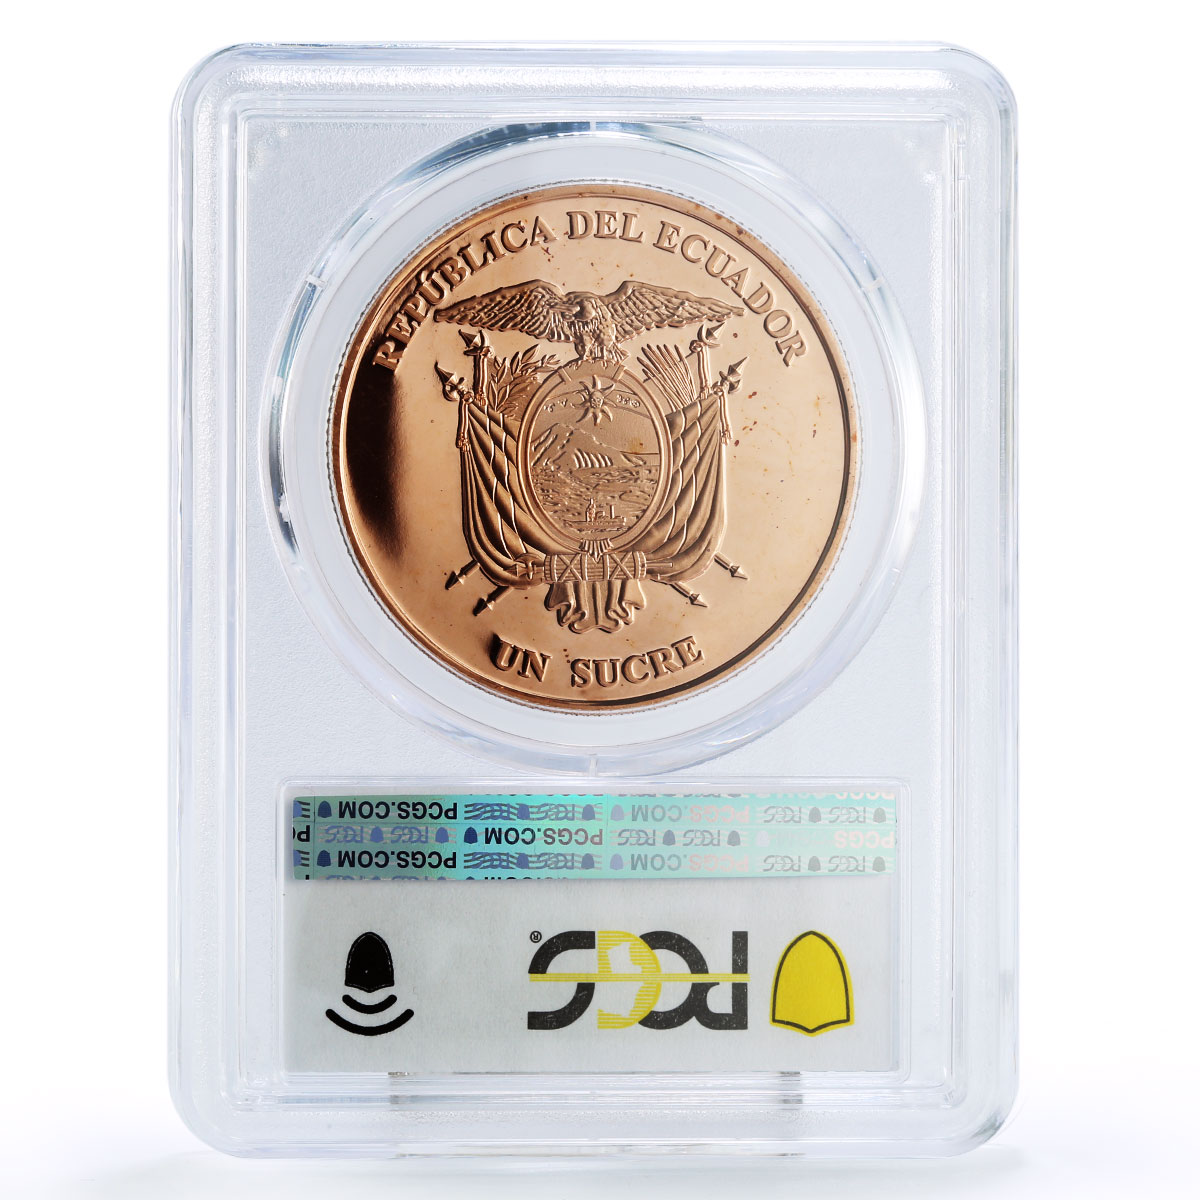 Ecuador 1 sucre 200 Years Independence Jose Antepara PR68 PCGS copper coin 2013